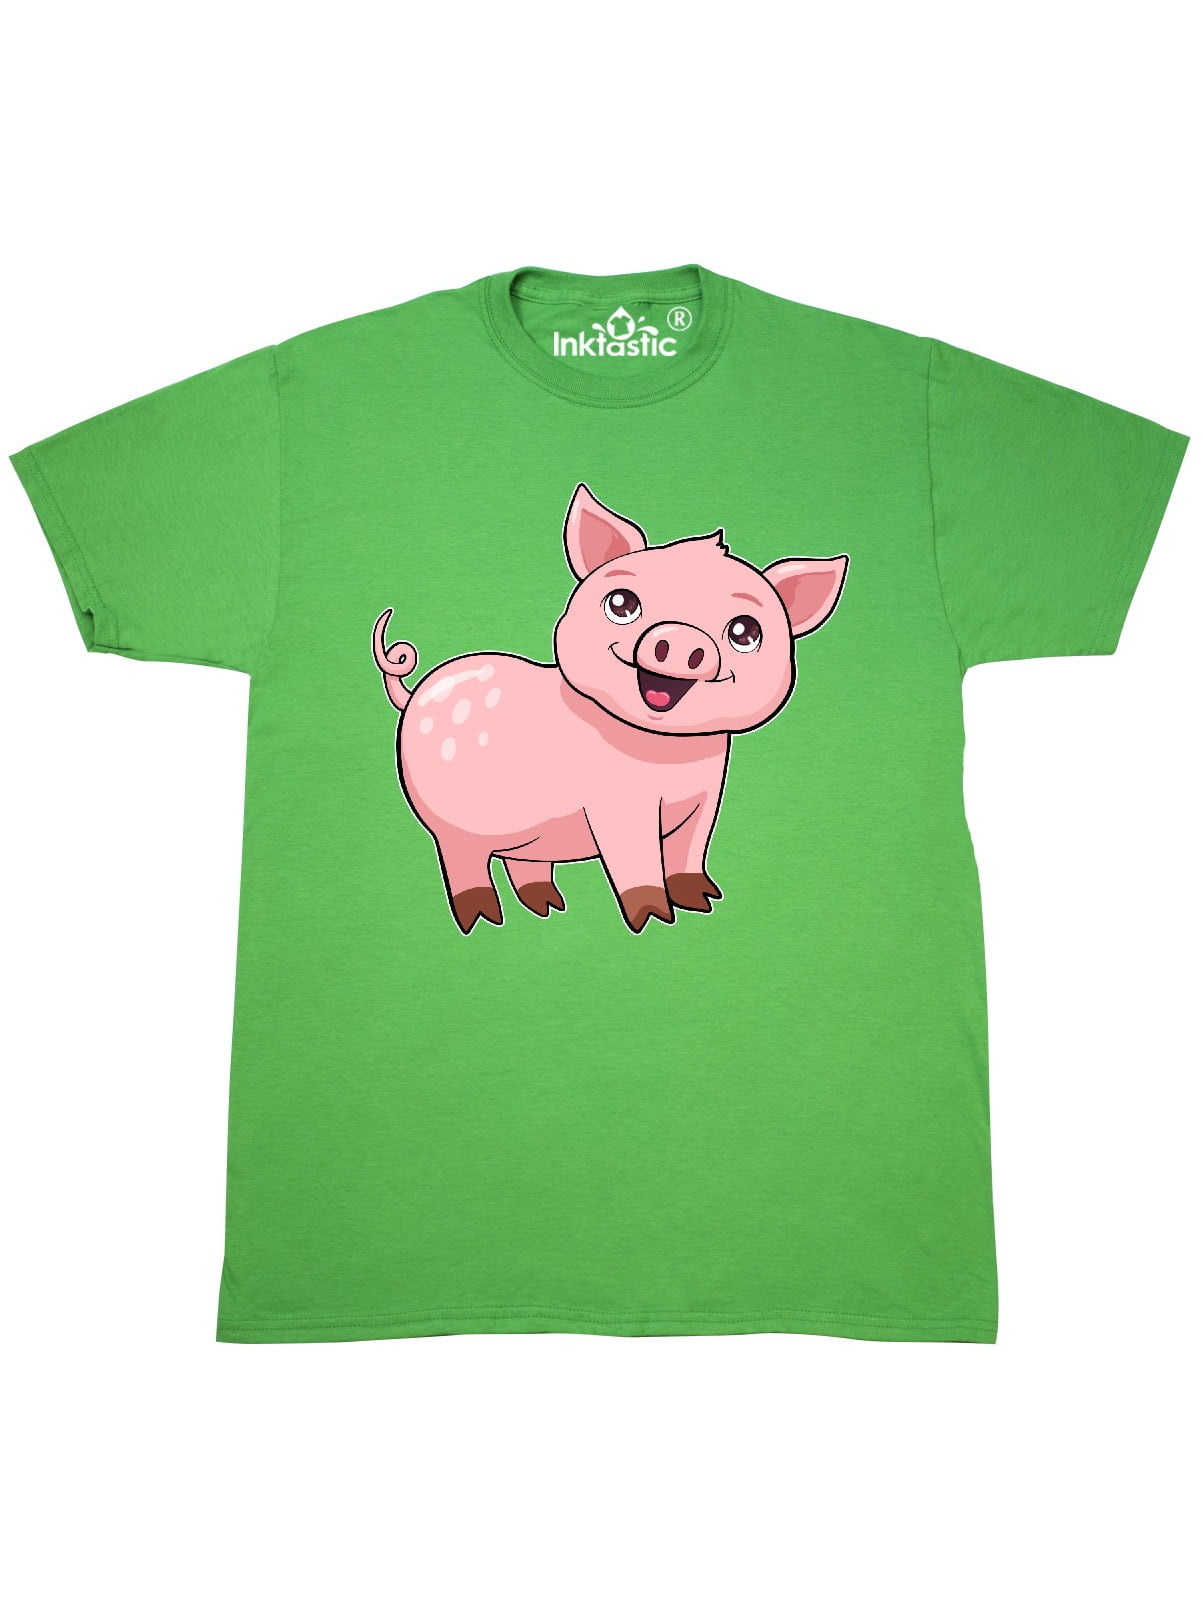 inktastic Cute Pig Baby T-Shirt 